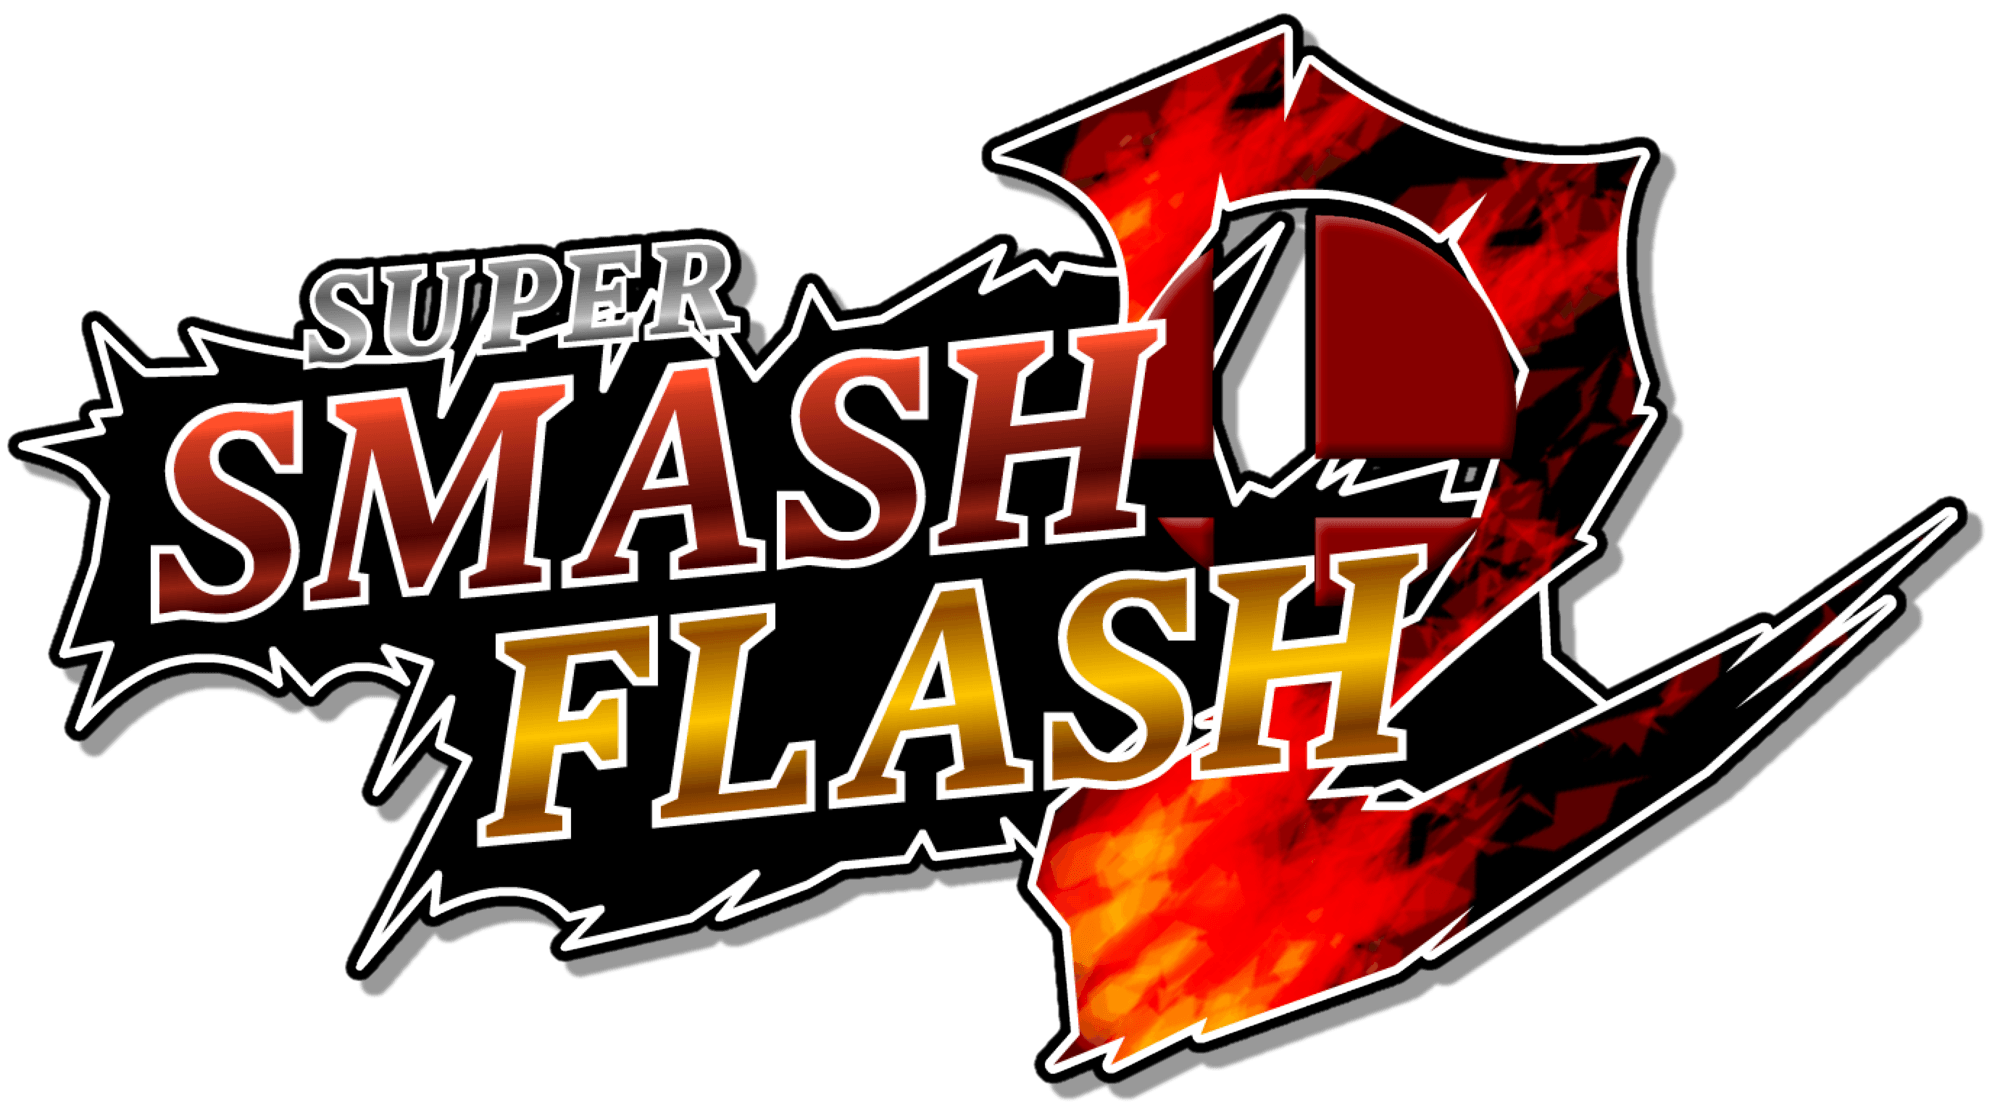 Epic Super Smash Bros Logo - Super Smash Flash 2